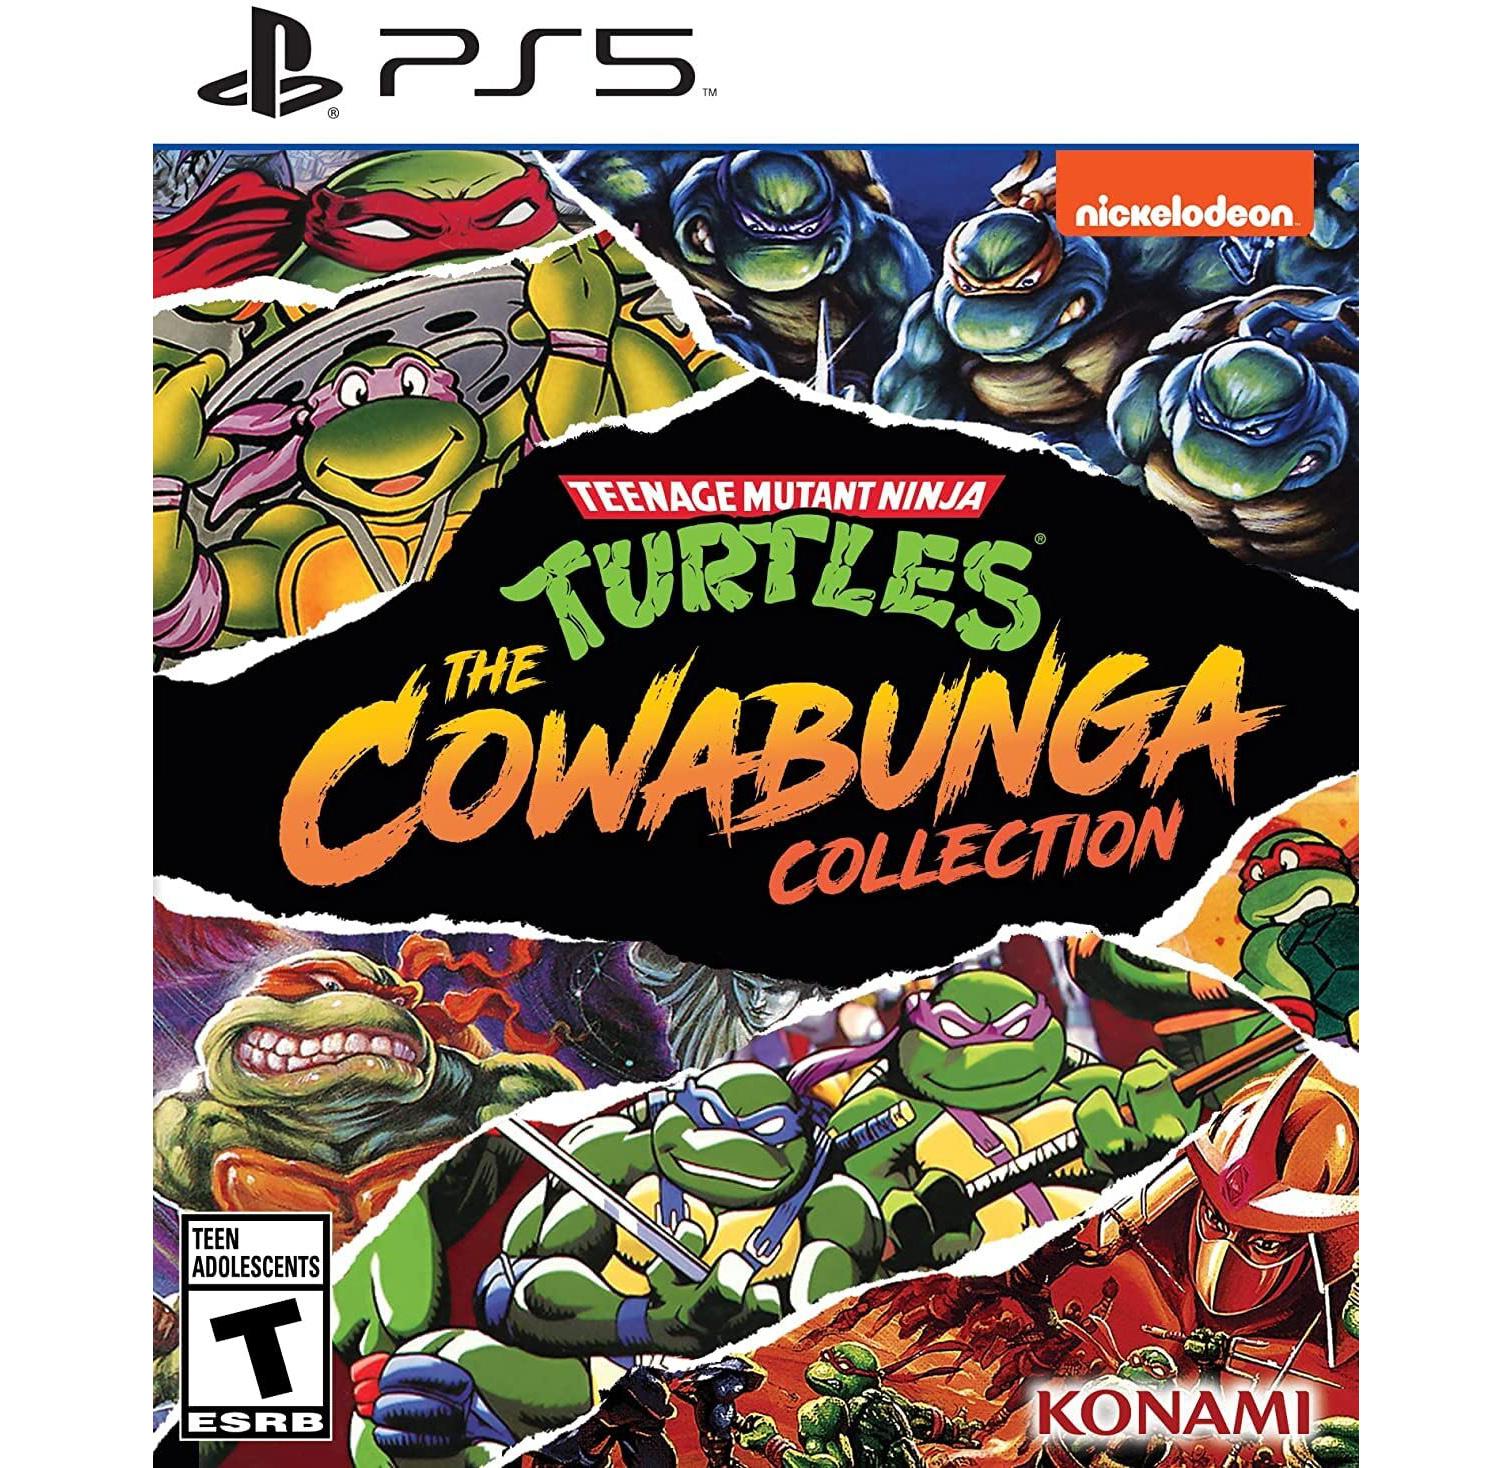 Teenage Mutant Ninja Turtles The Cowabunga Collection PS5 for $19.93